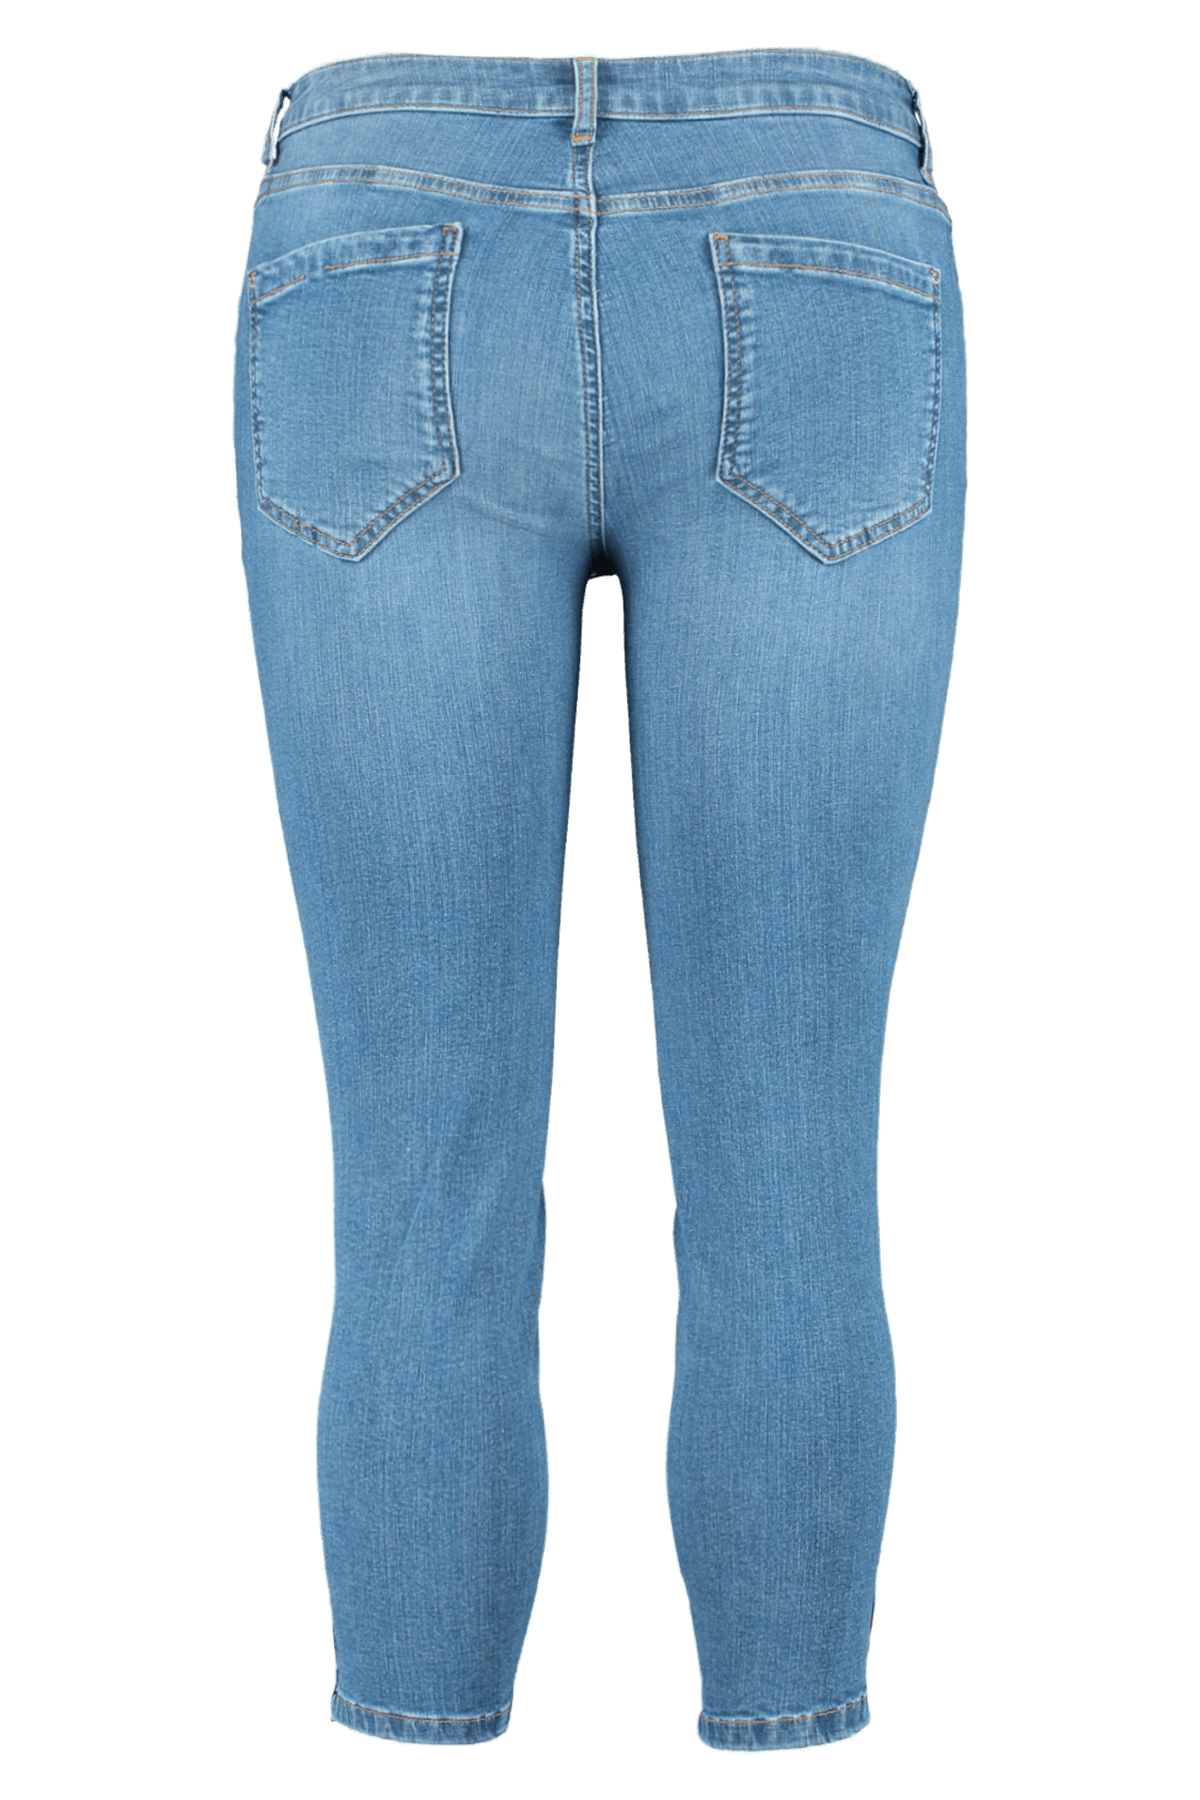 Slim leg jeans  image 2